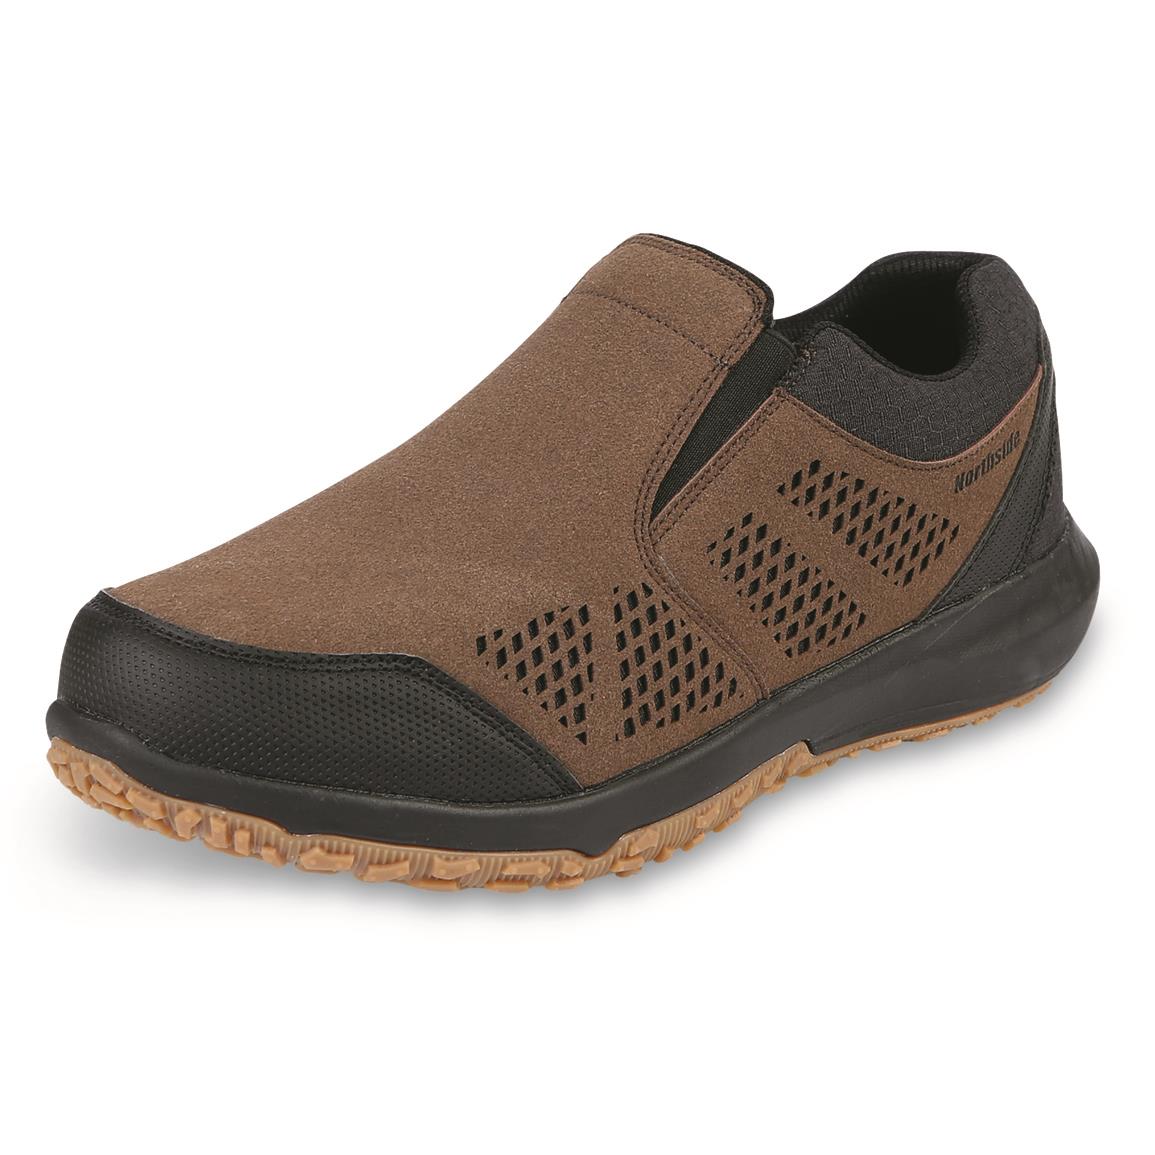 Northside Men's Benton Moc Shoes, Brown/black